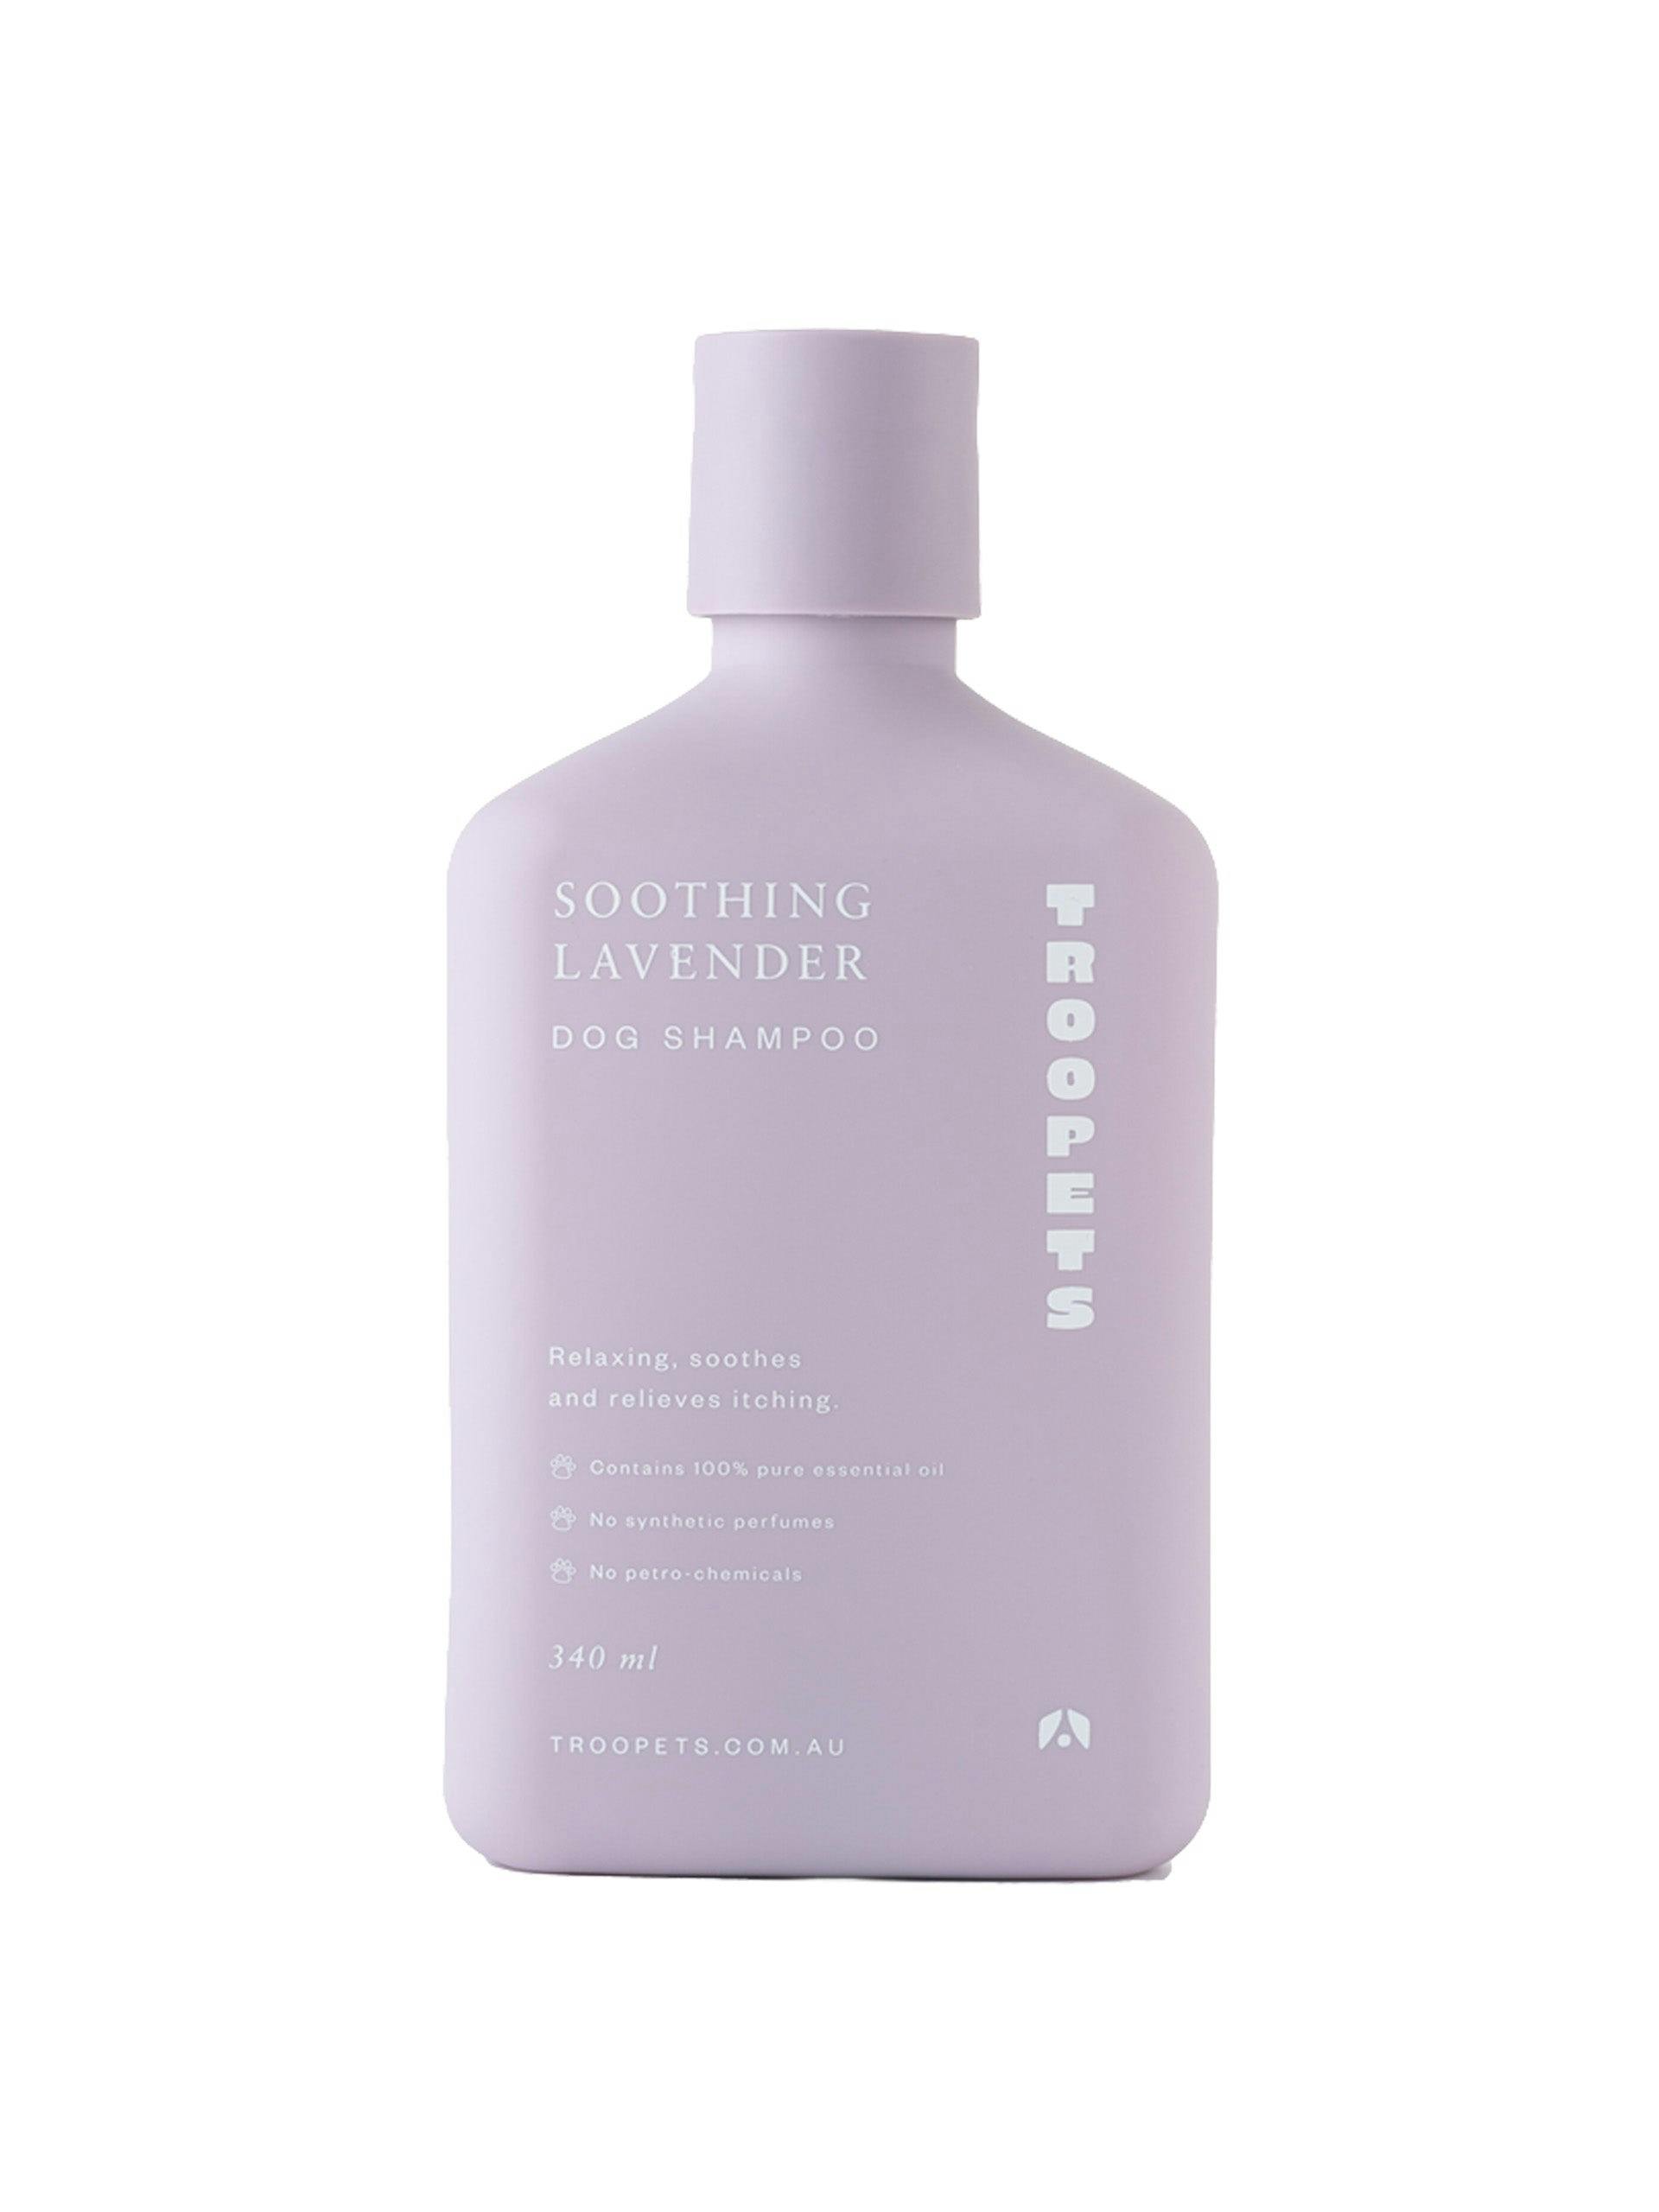 Soothing lavender dog shampoo